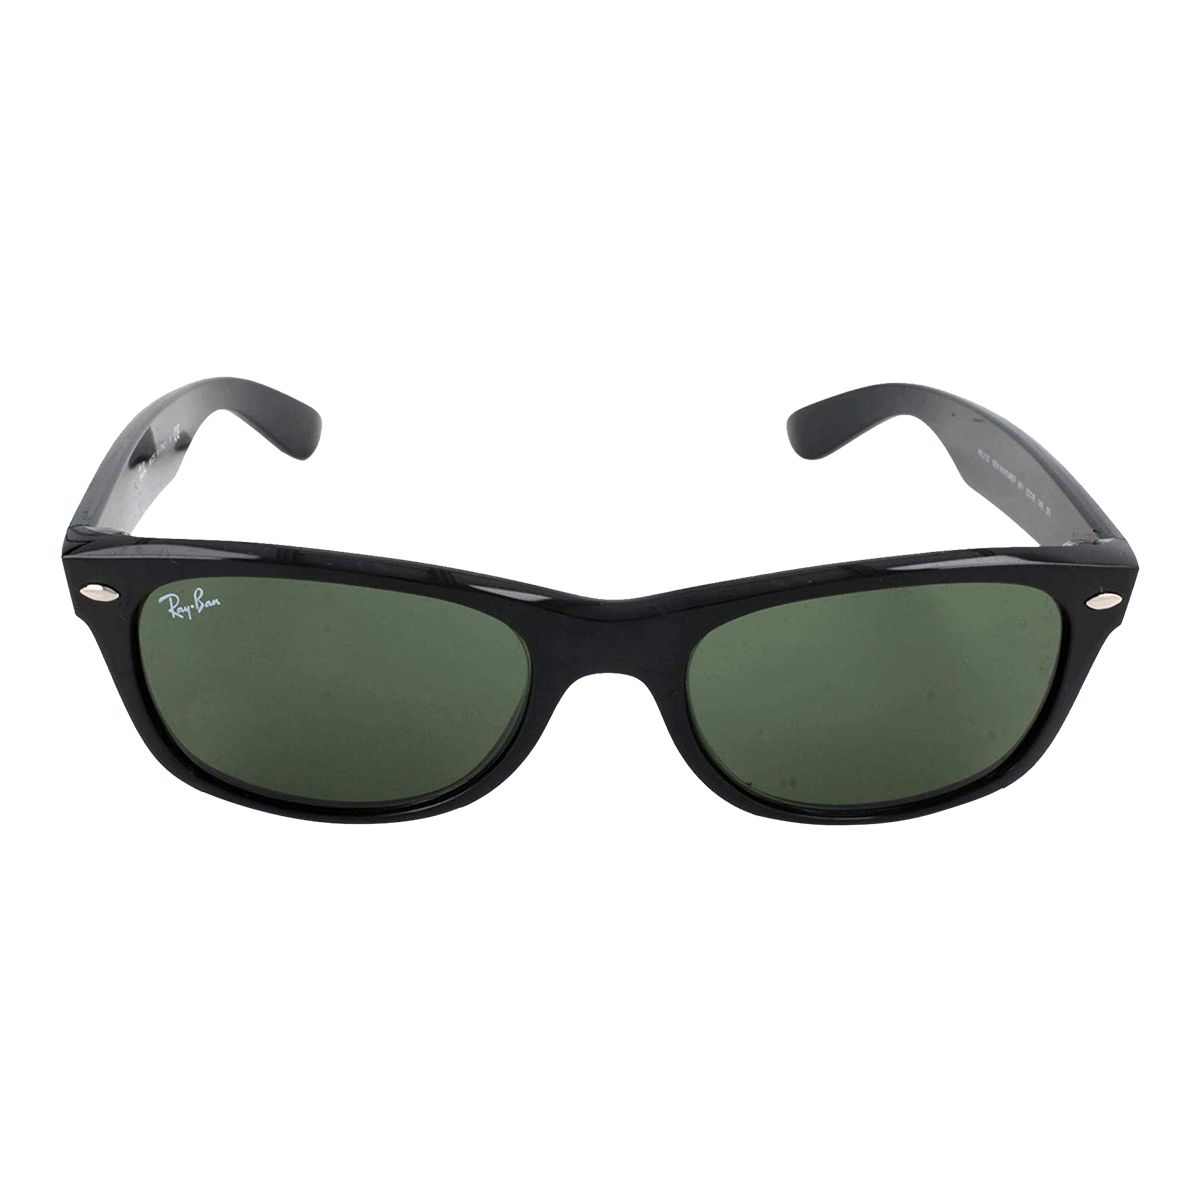 Image of Ray-Ban New Wayfarer Black/Crystal Green G-15Xlt Sunglasses